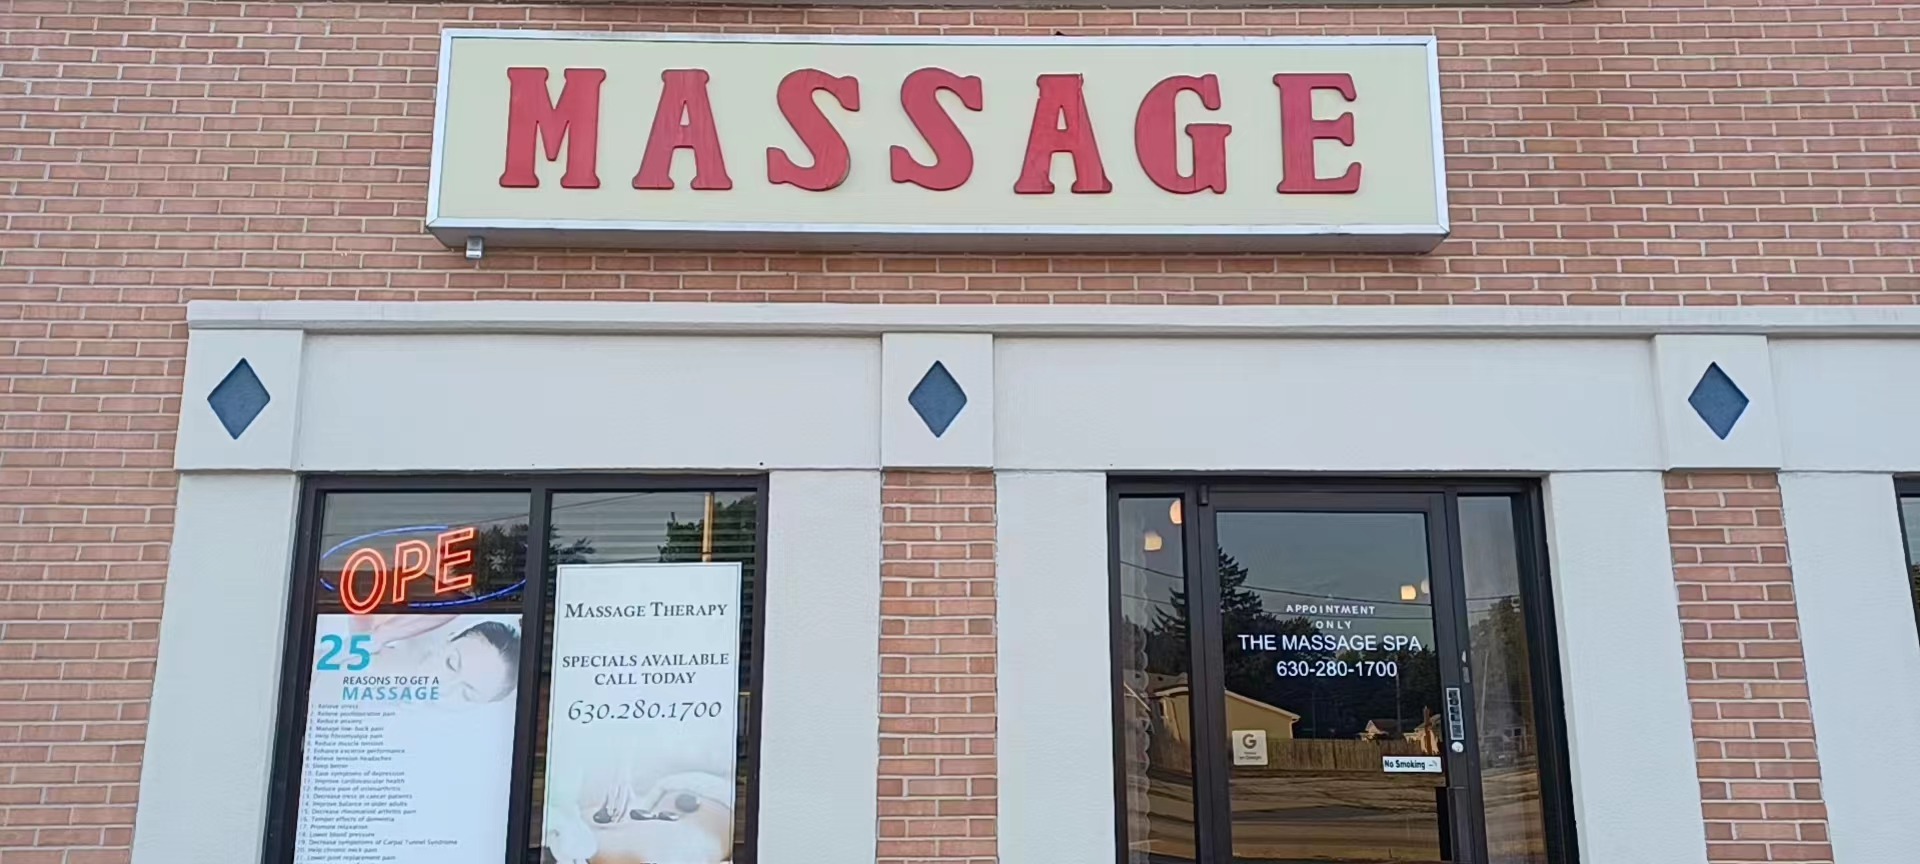 The Massage Spa 115 E South St Suite A, Plano Illinois 60545